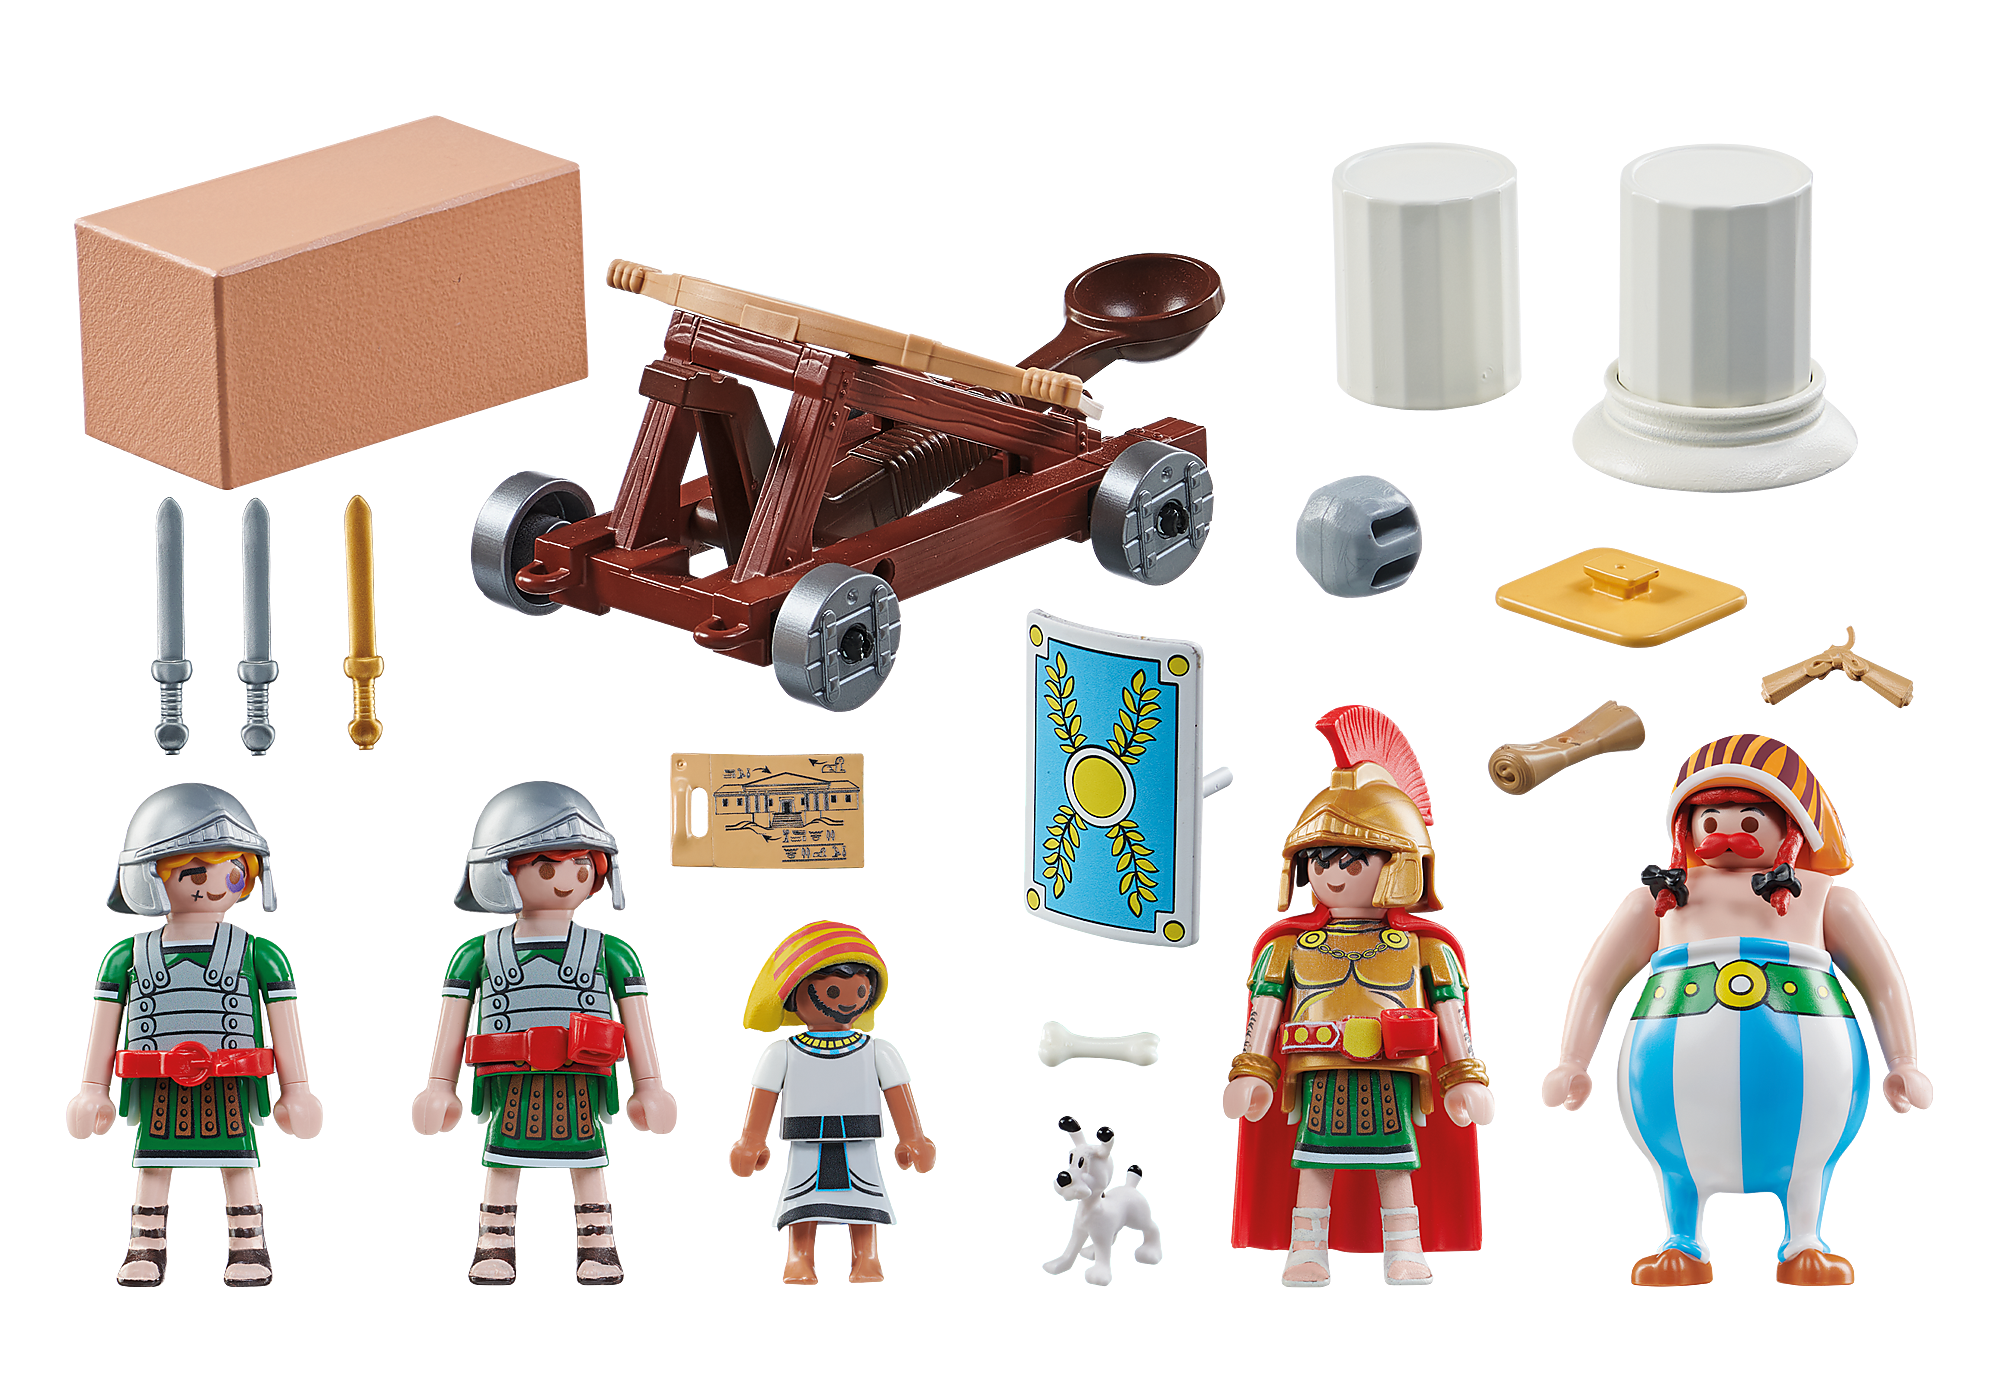 EXPOSITION playmobil (astérix, napoléon, viking, pirate, lego) 